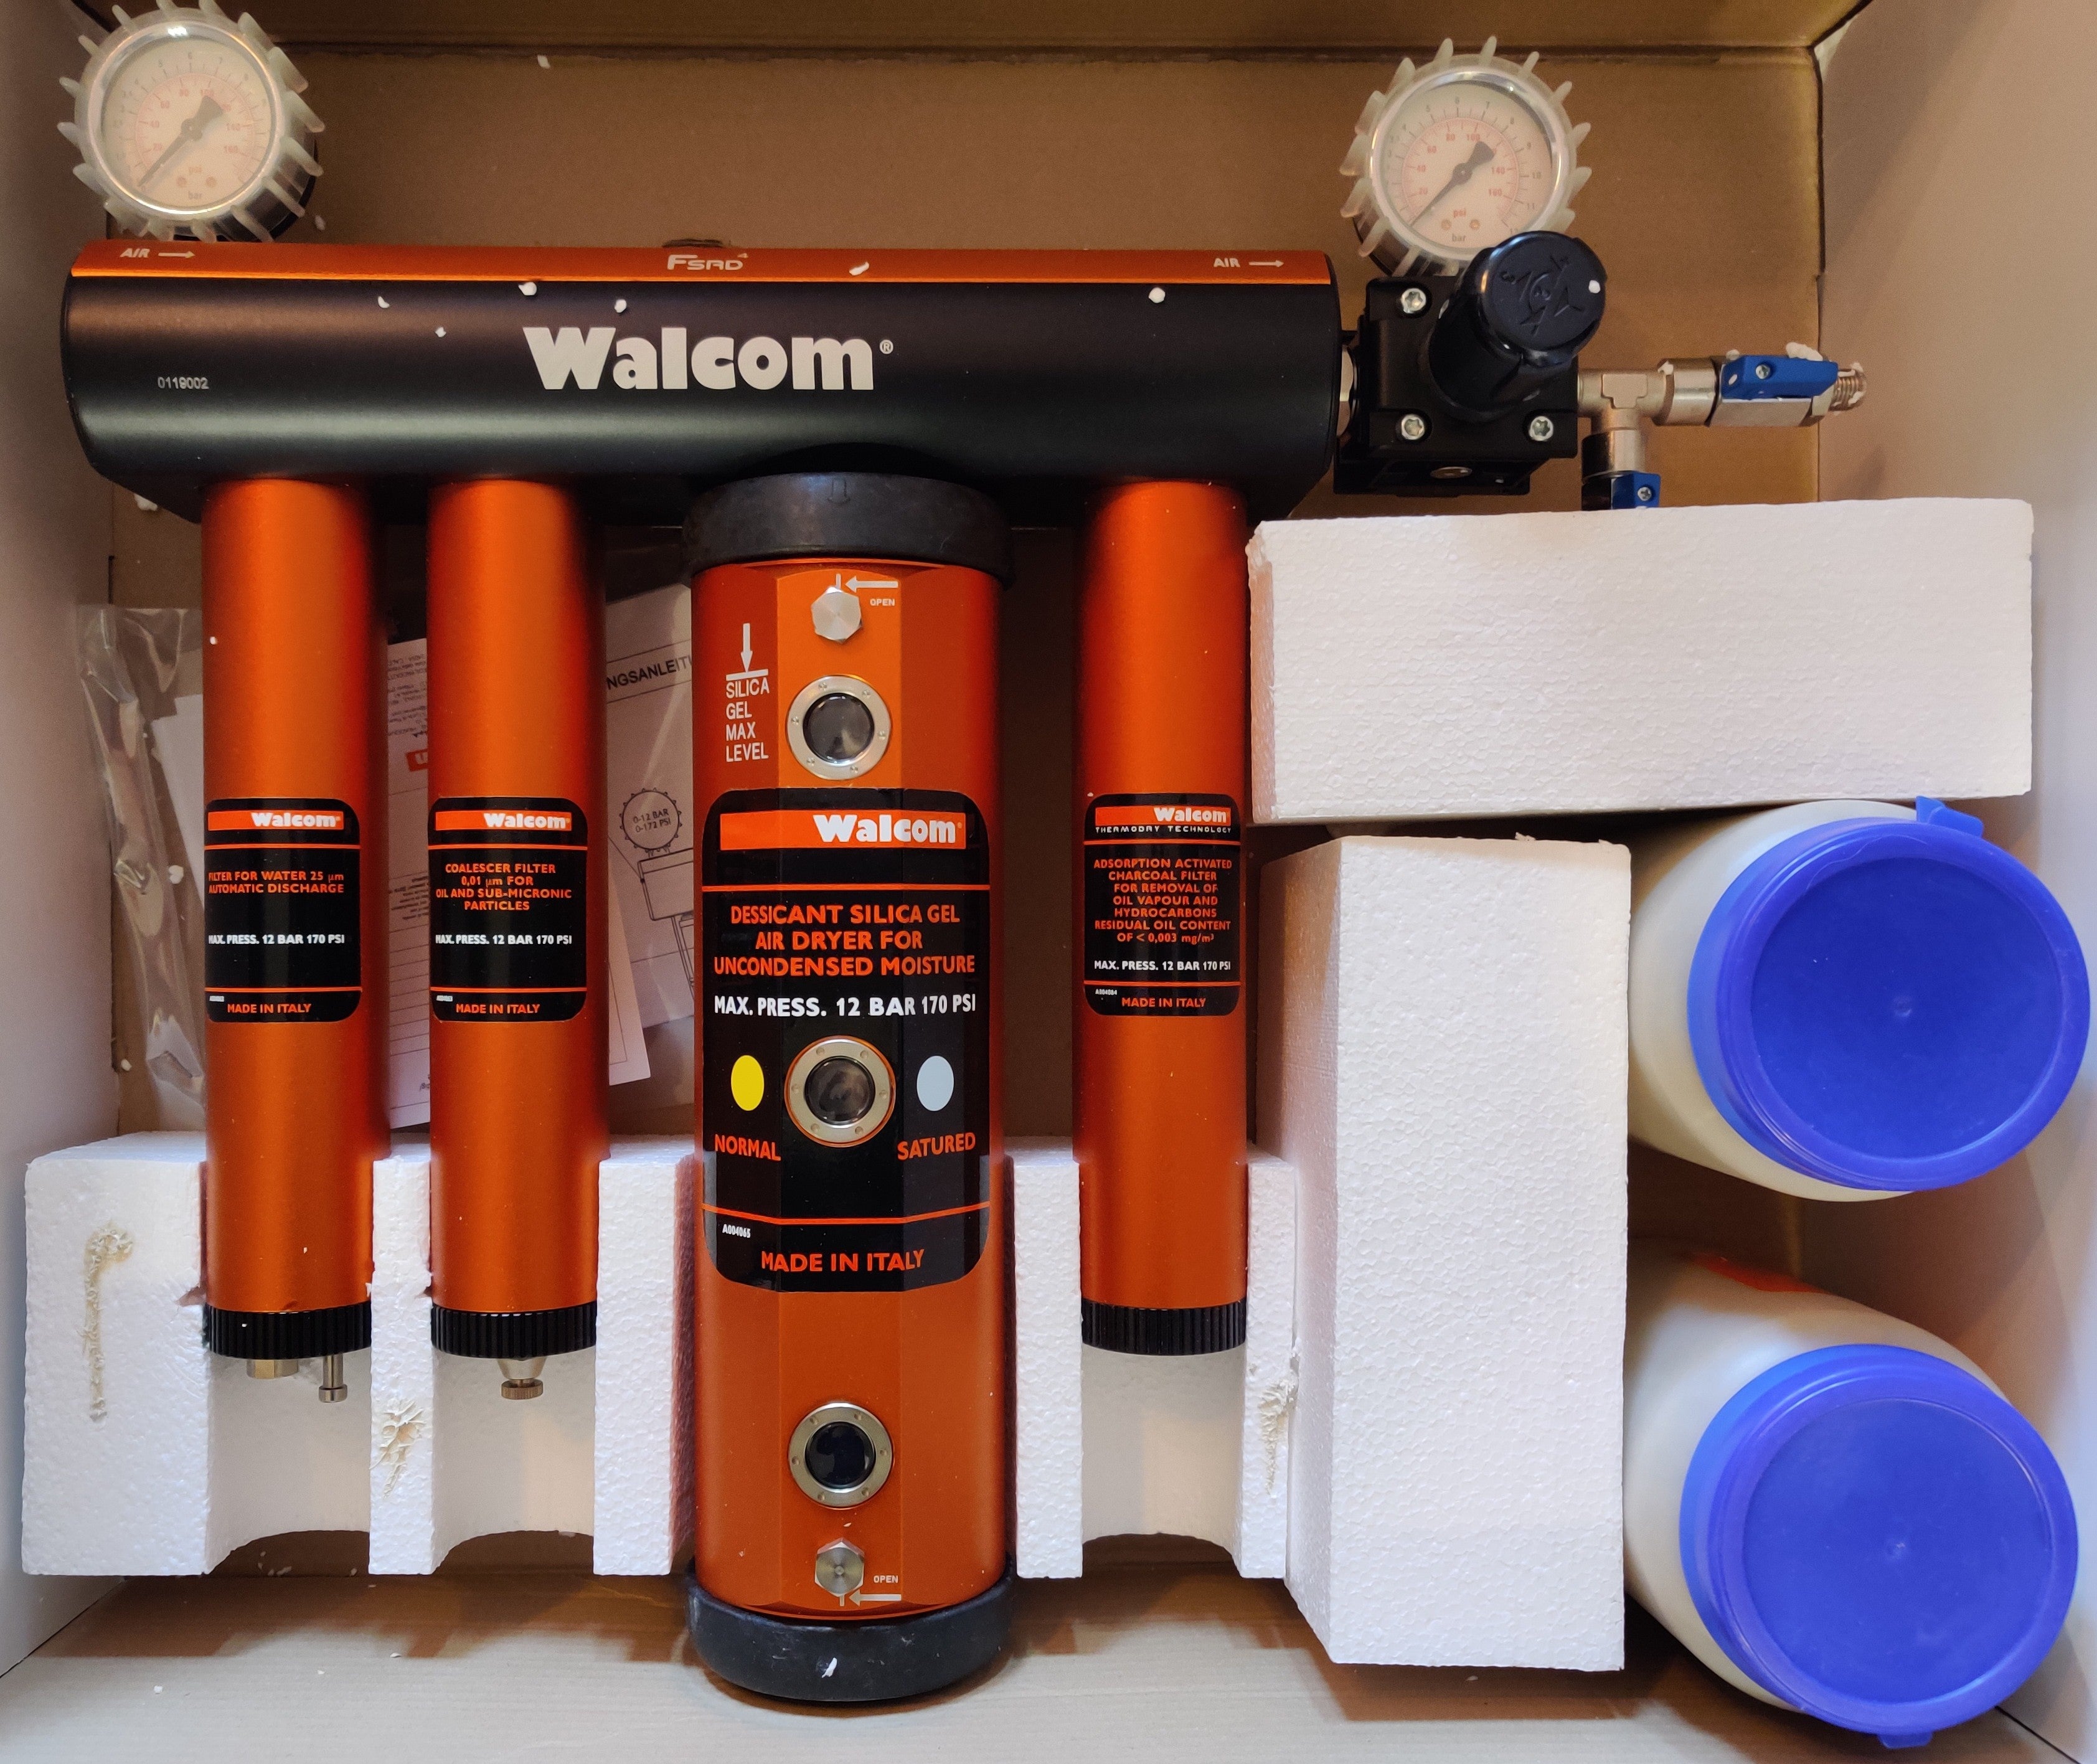 Walcom Fsrd4  Air filtration